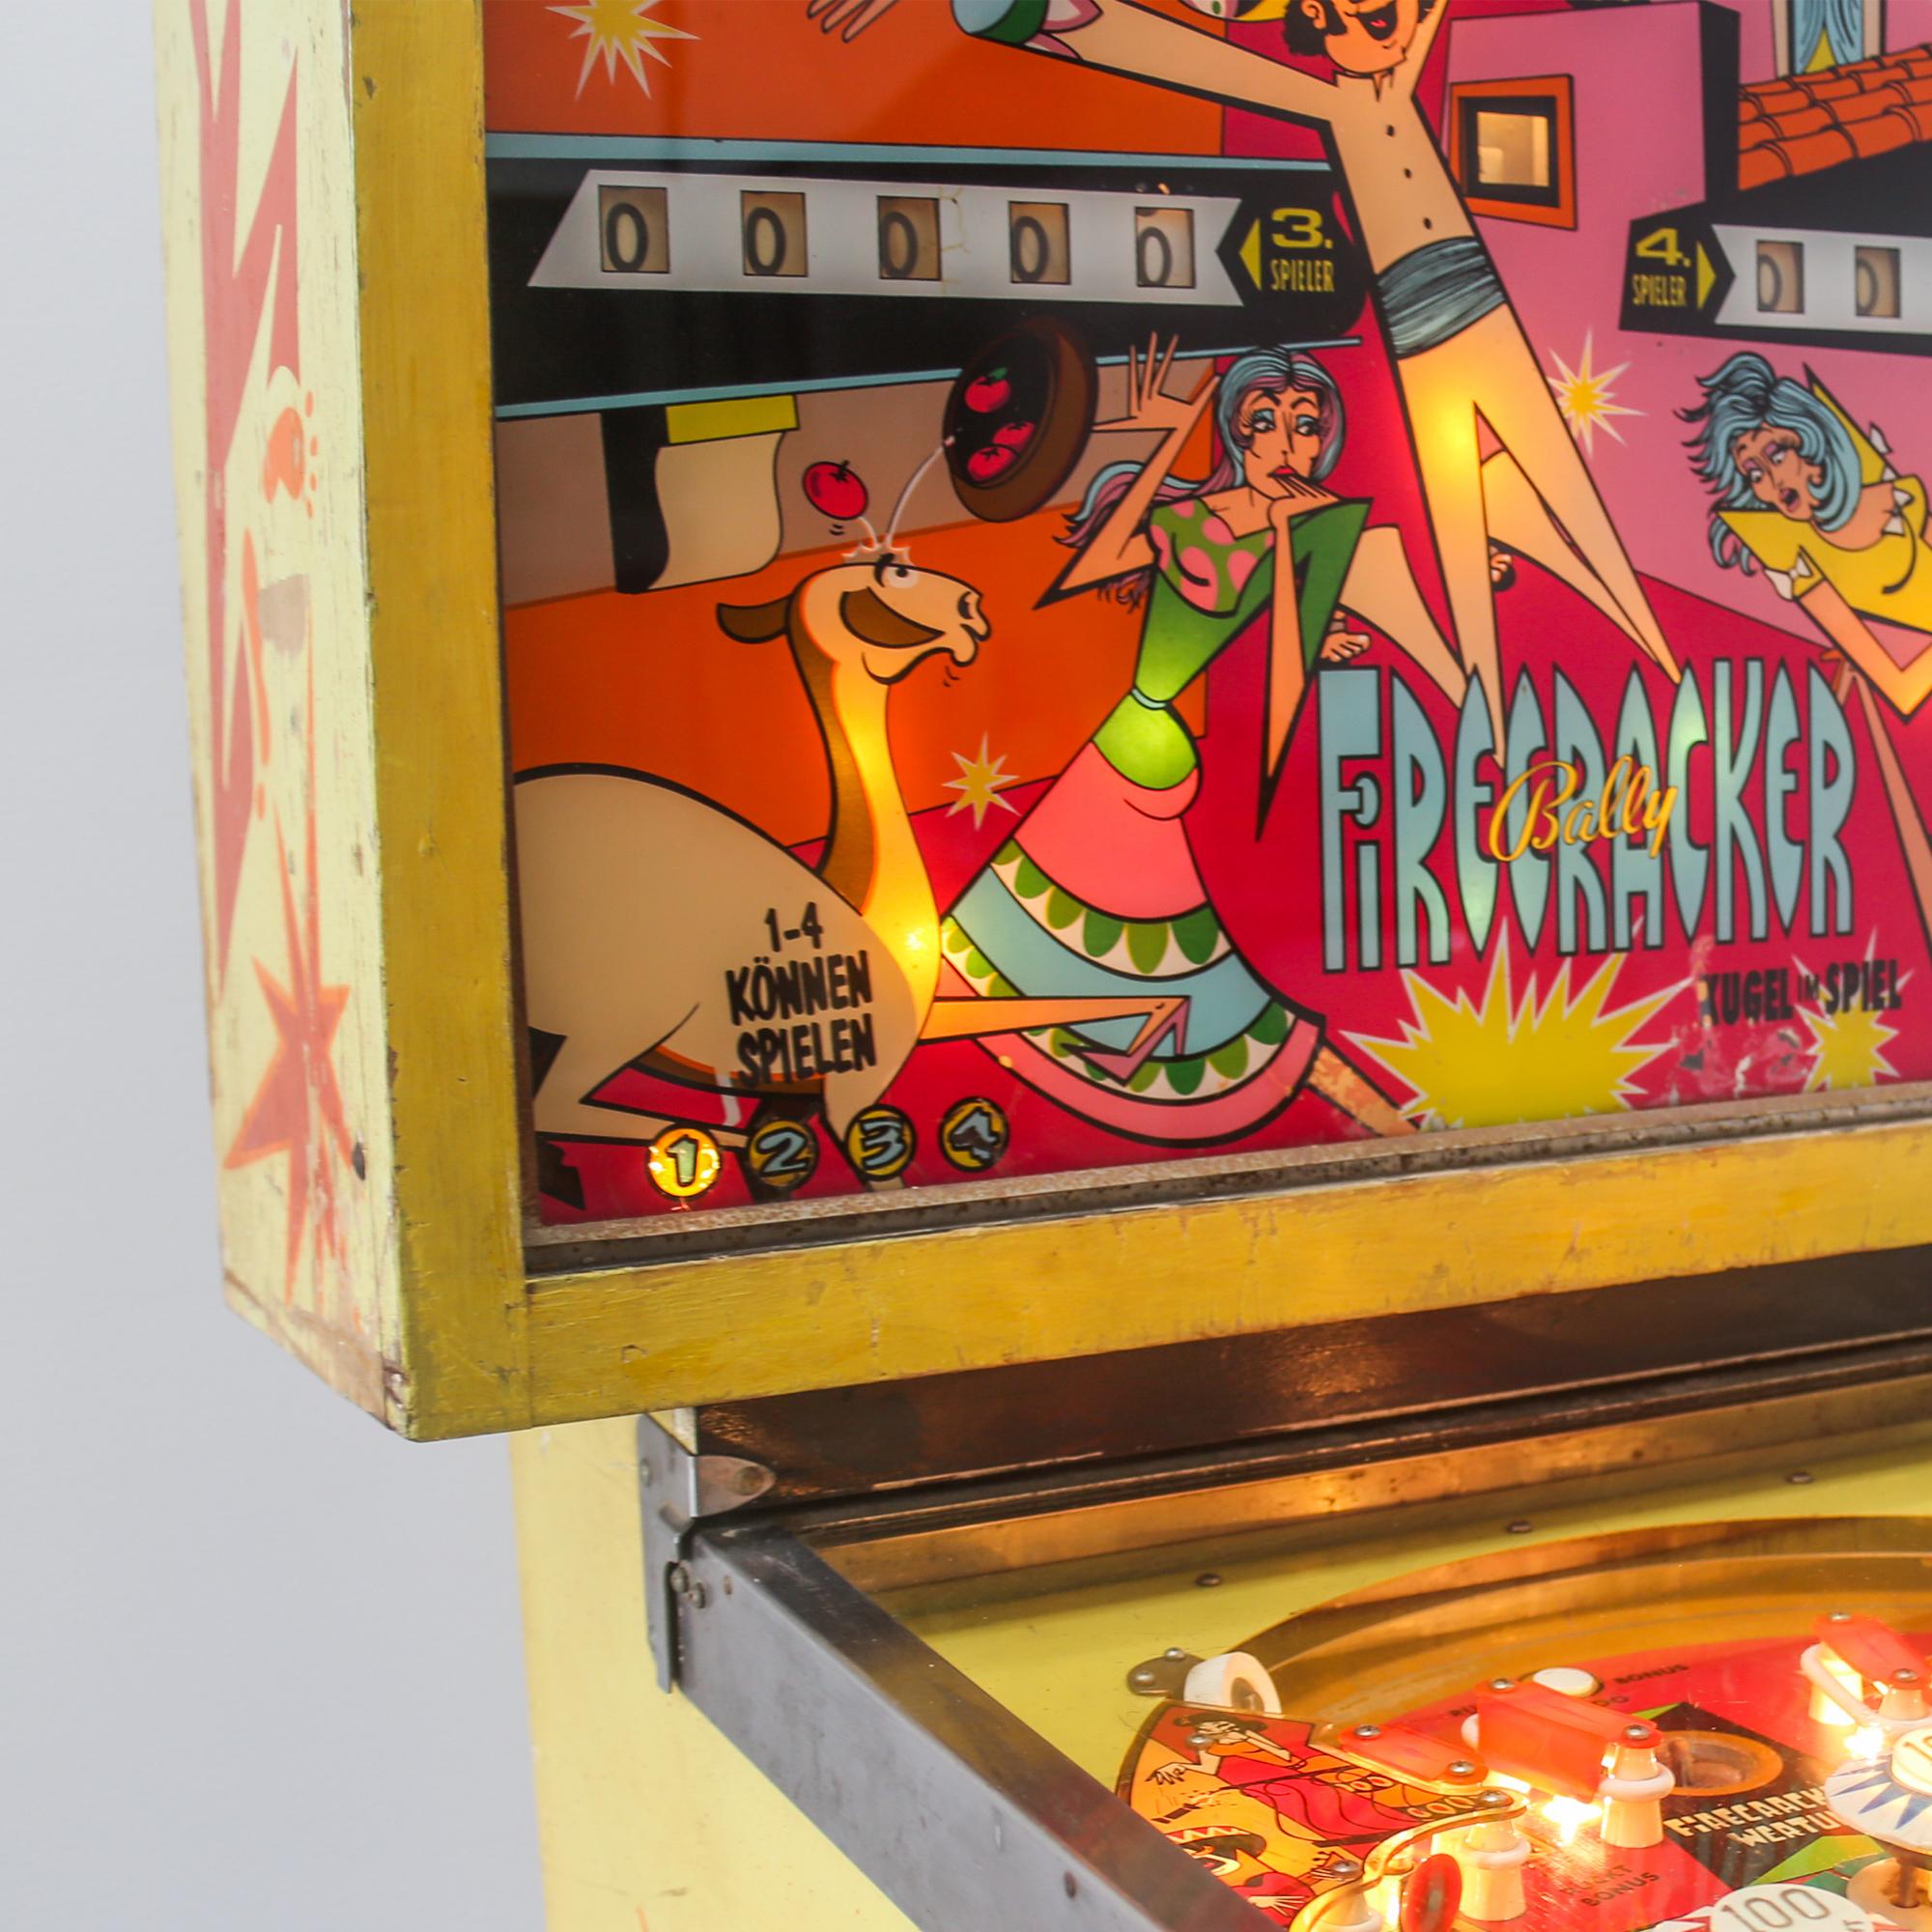 Mid Century Modern German Pinball Machine “Firecracker” Art by Jerry Kelly, 1971 1